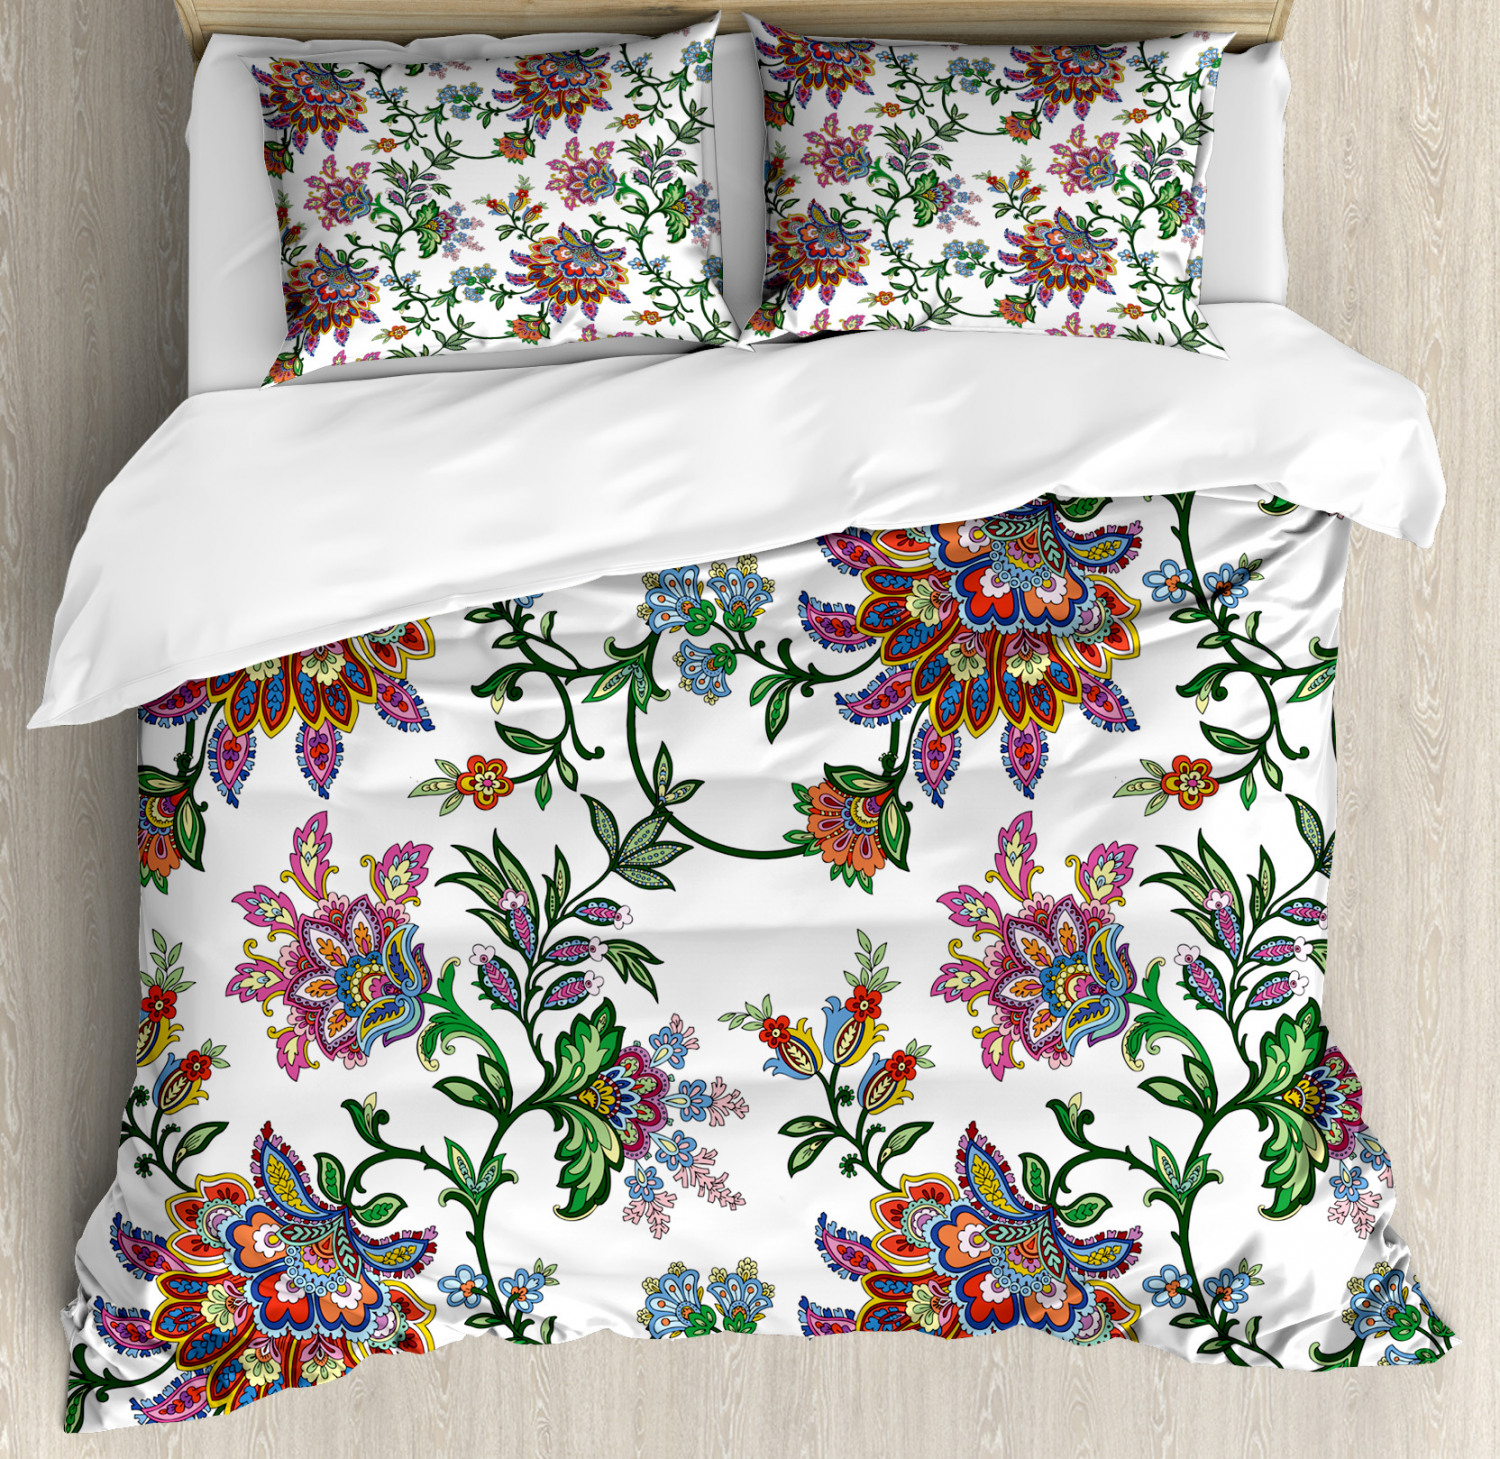 Flower Duvet Cover Set With Pillow Shams Vintage Floral Ornaments